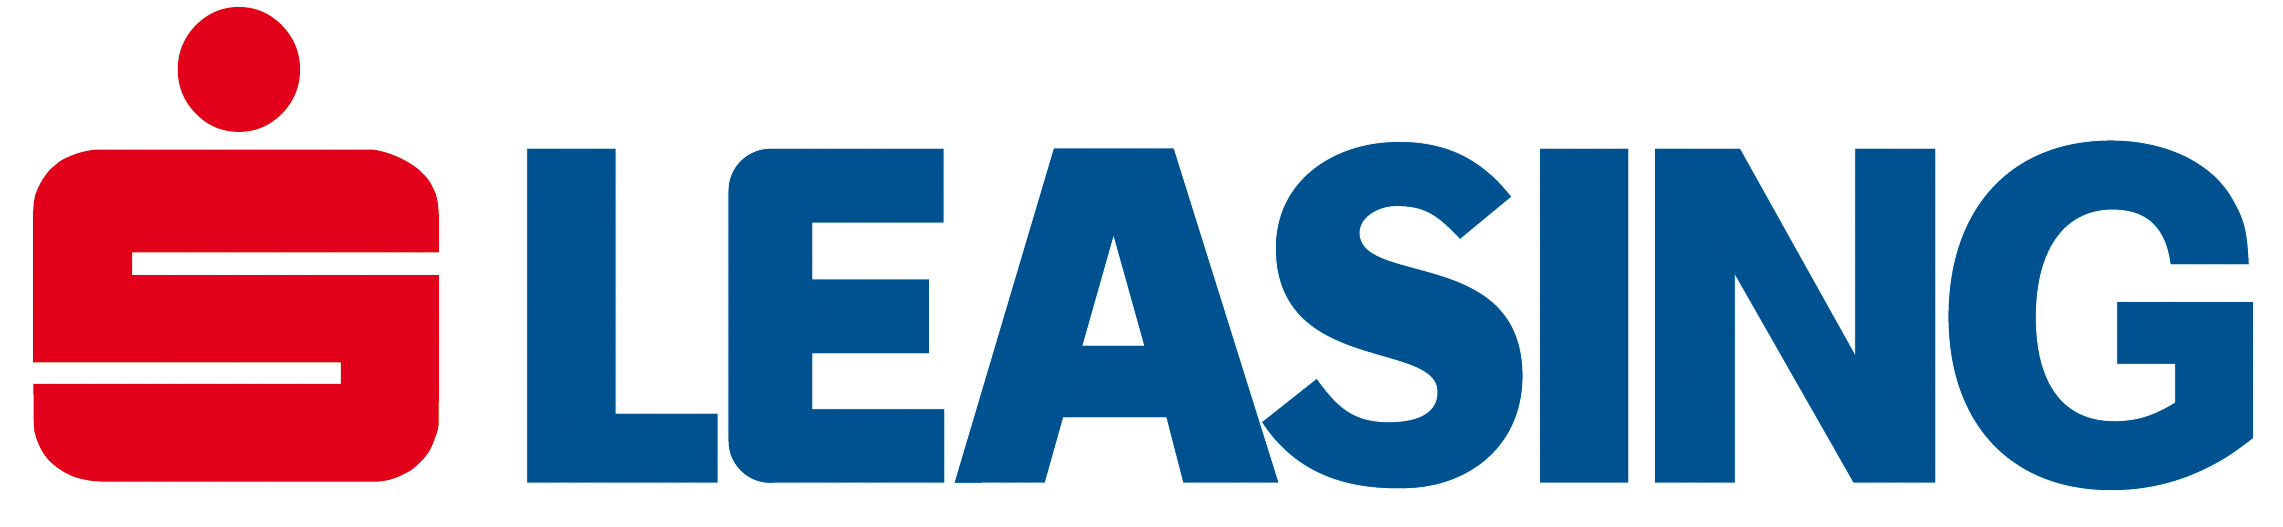 Ersteleasing logo